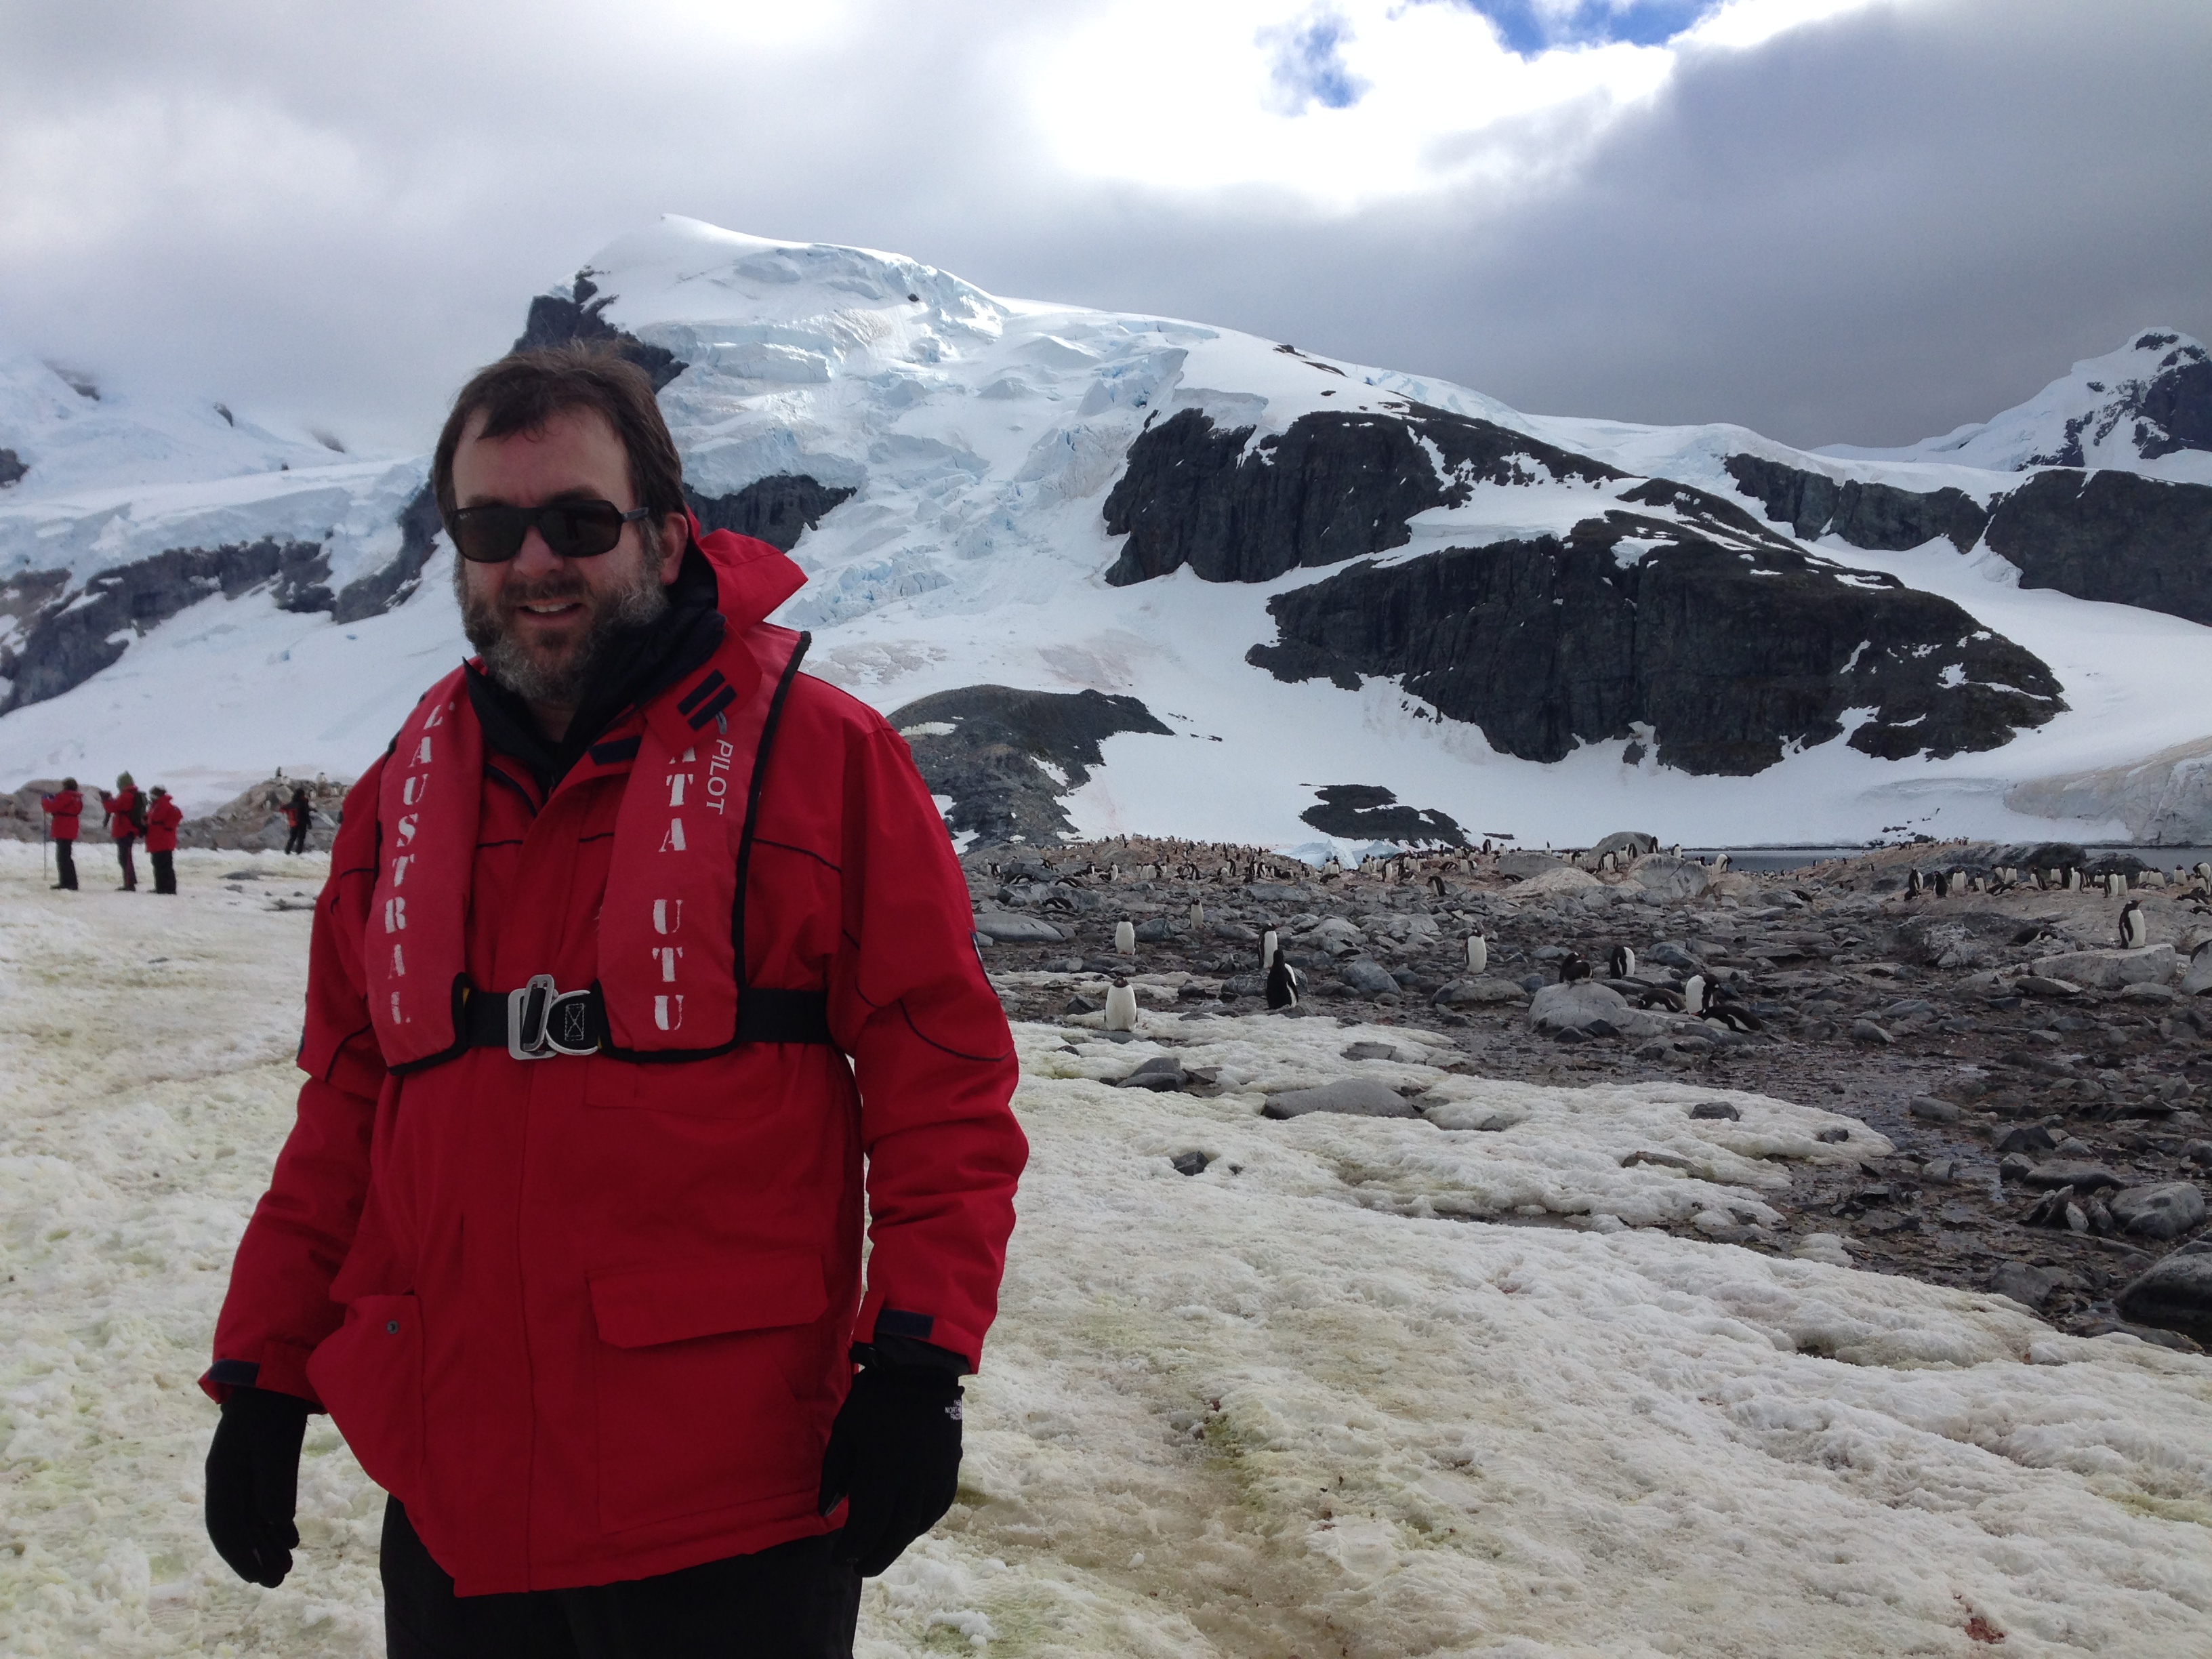 My visit to Antarctica 2014